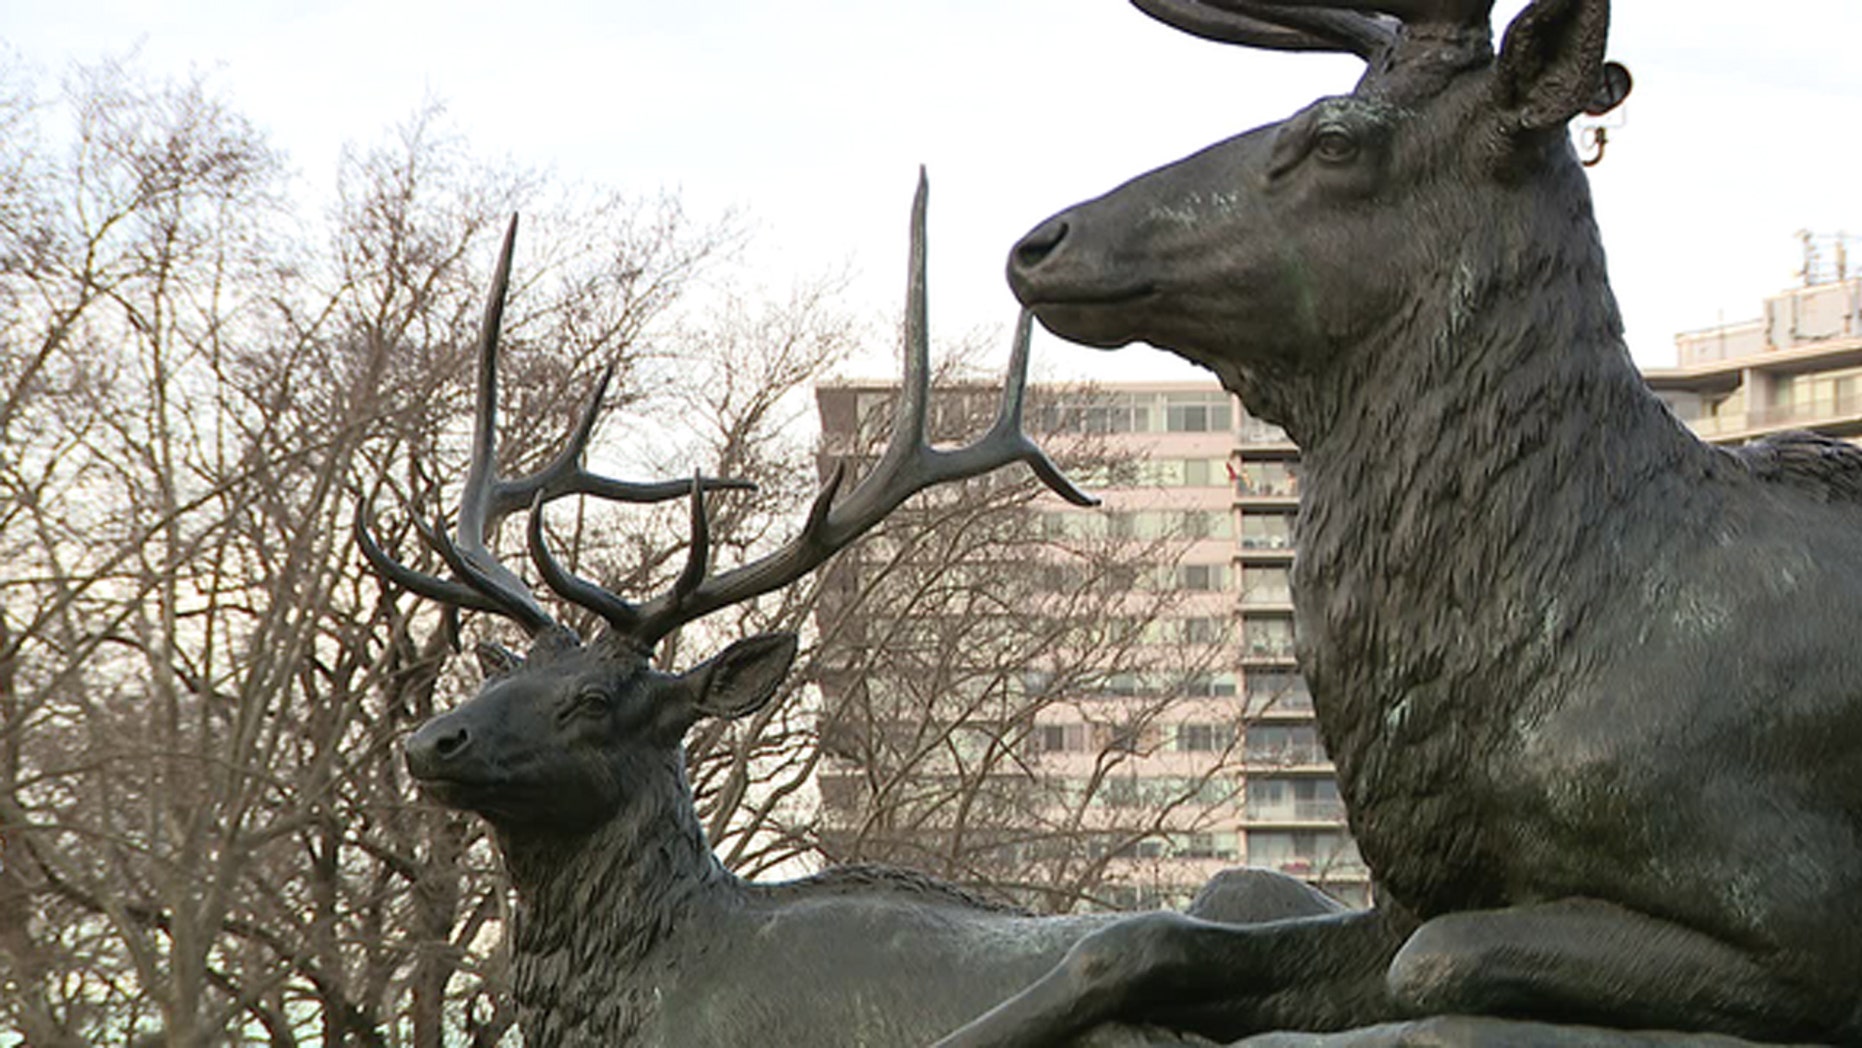 Man impaled on deer statue in Philadelphia traffic circle